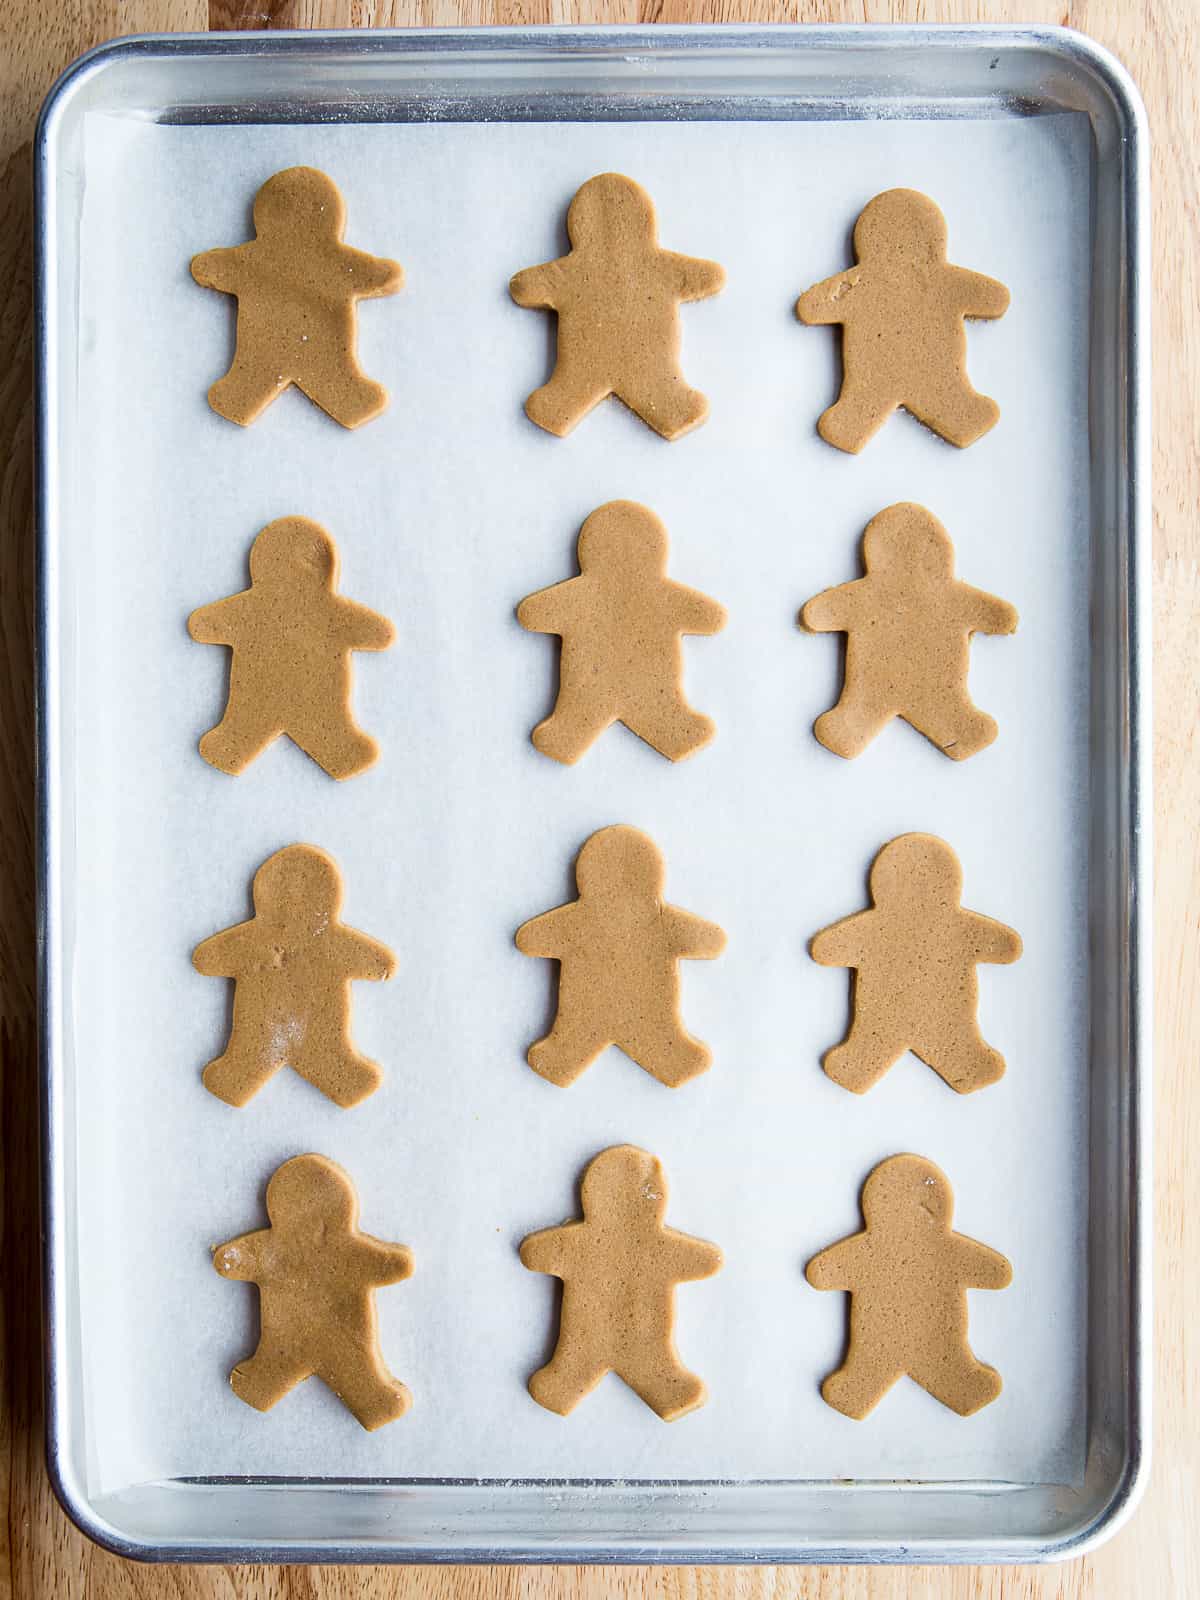 Gluten free gingerbread dough cut into gingerbread men shapes on a baking sheet.